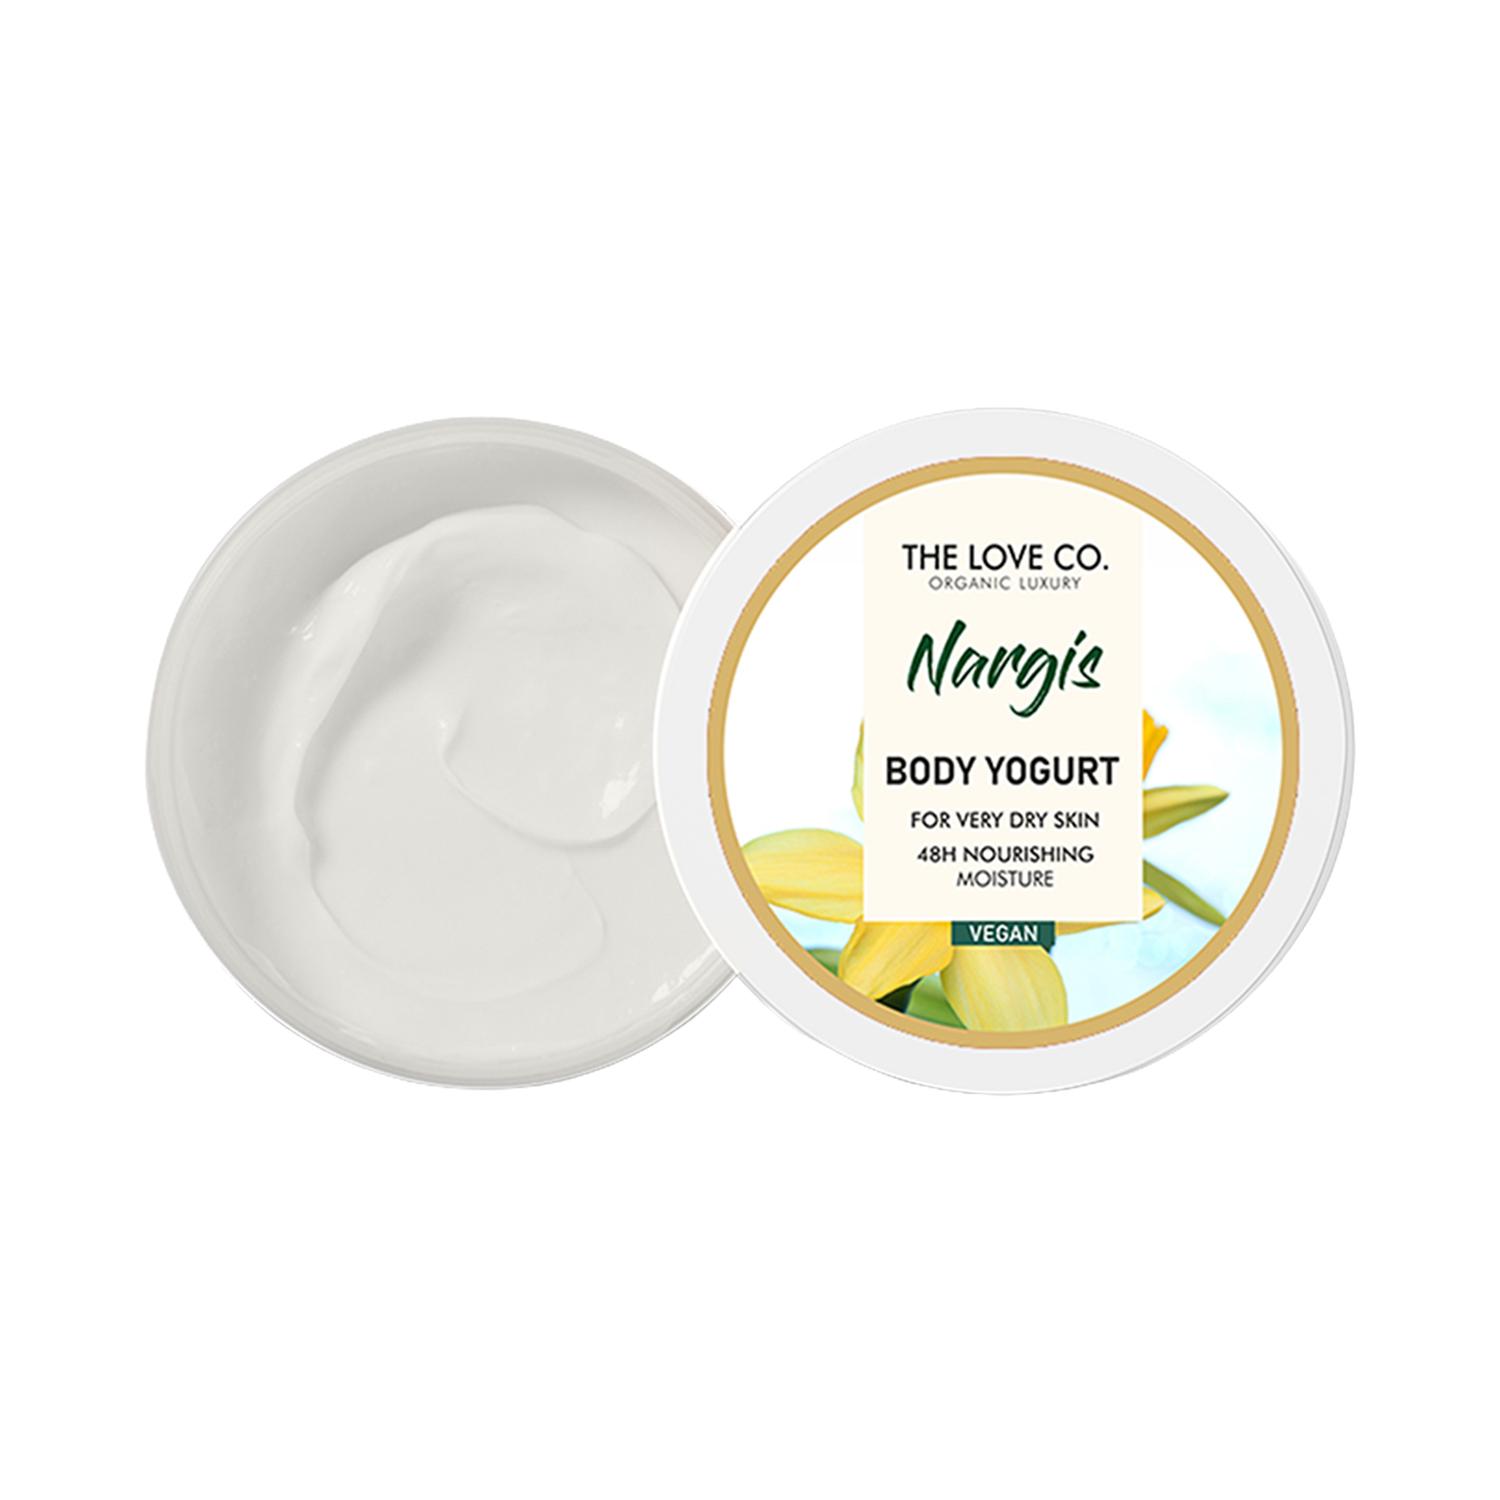 THE LOVE CO. | THE LOVE CO. Nargis Body Yogurt Deep Moisturization With Pure Shea Butter (200g)